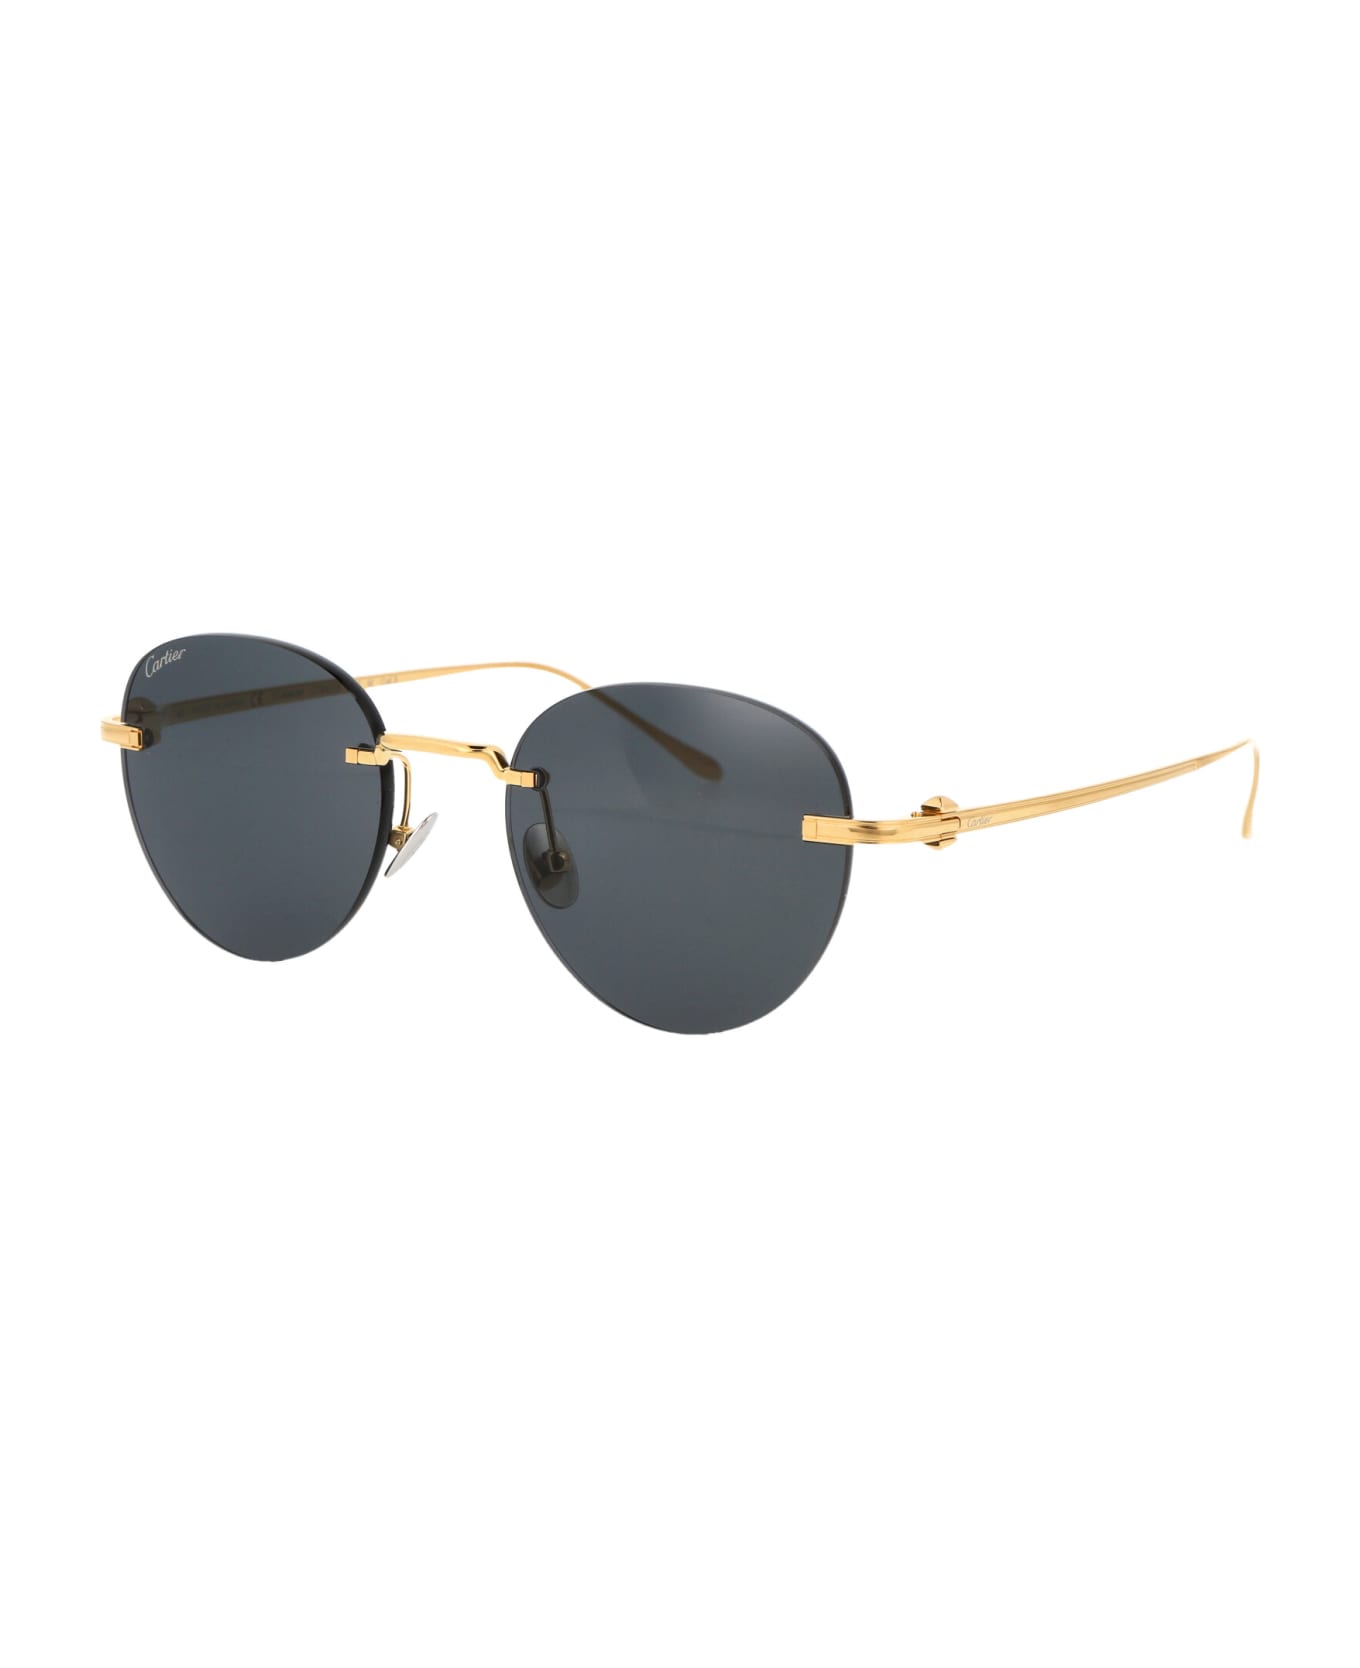 Cartier Eyewear Ct0331s Sunglasses - 002 GOLD GOLD GREY